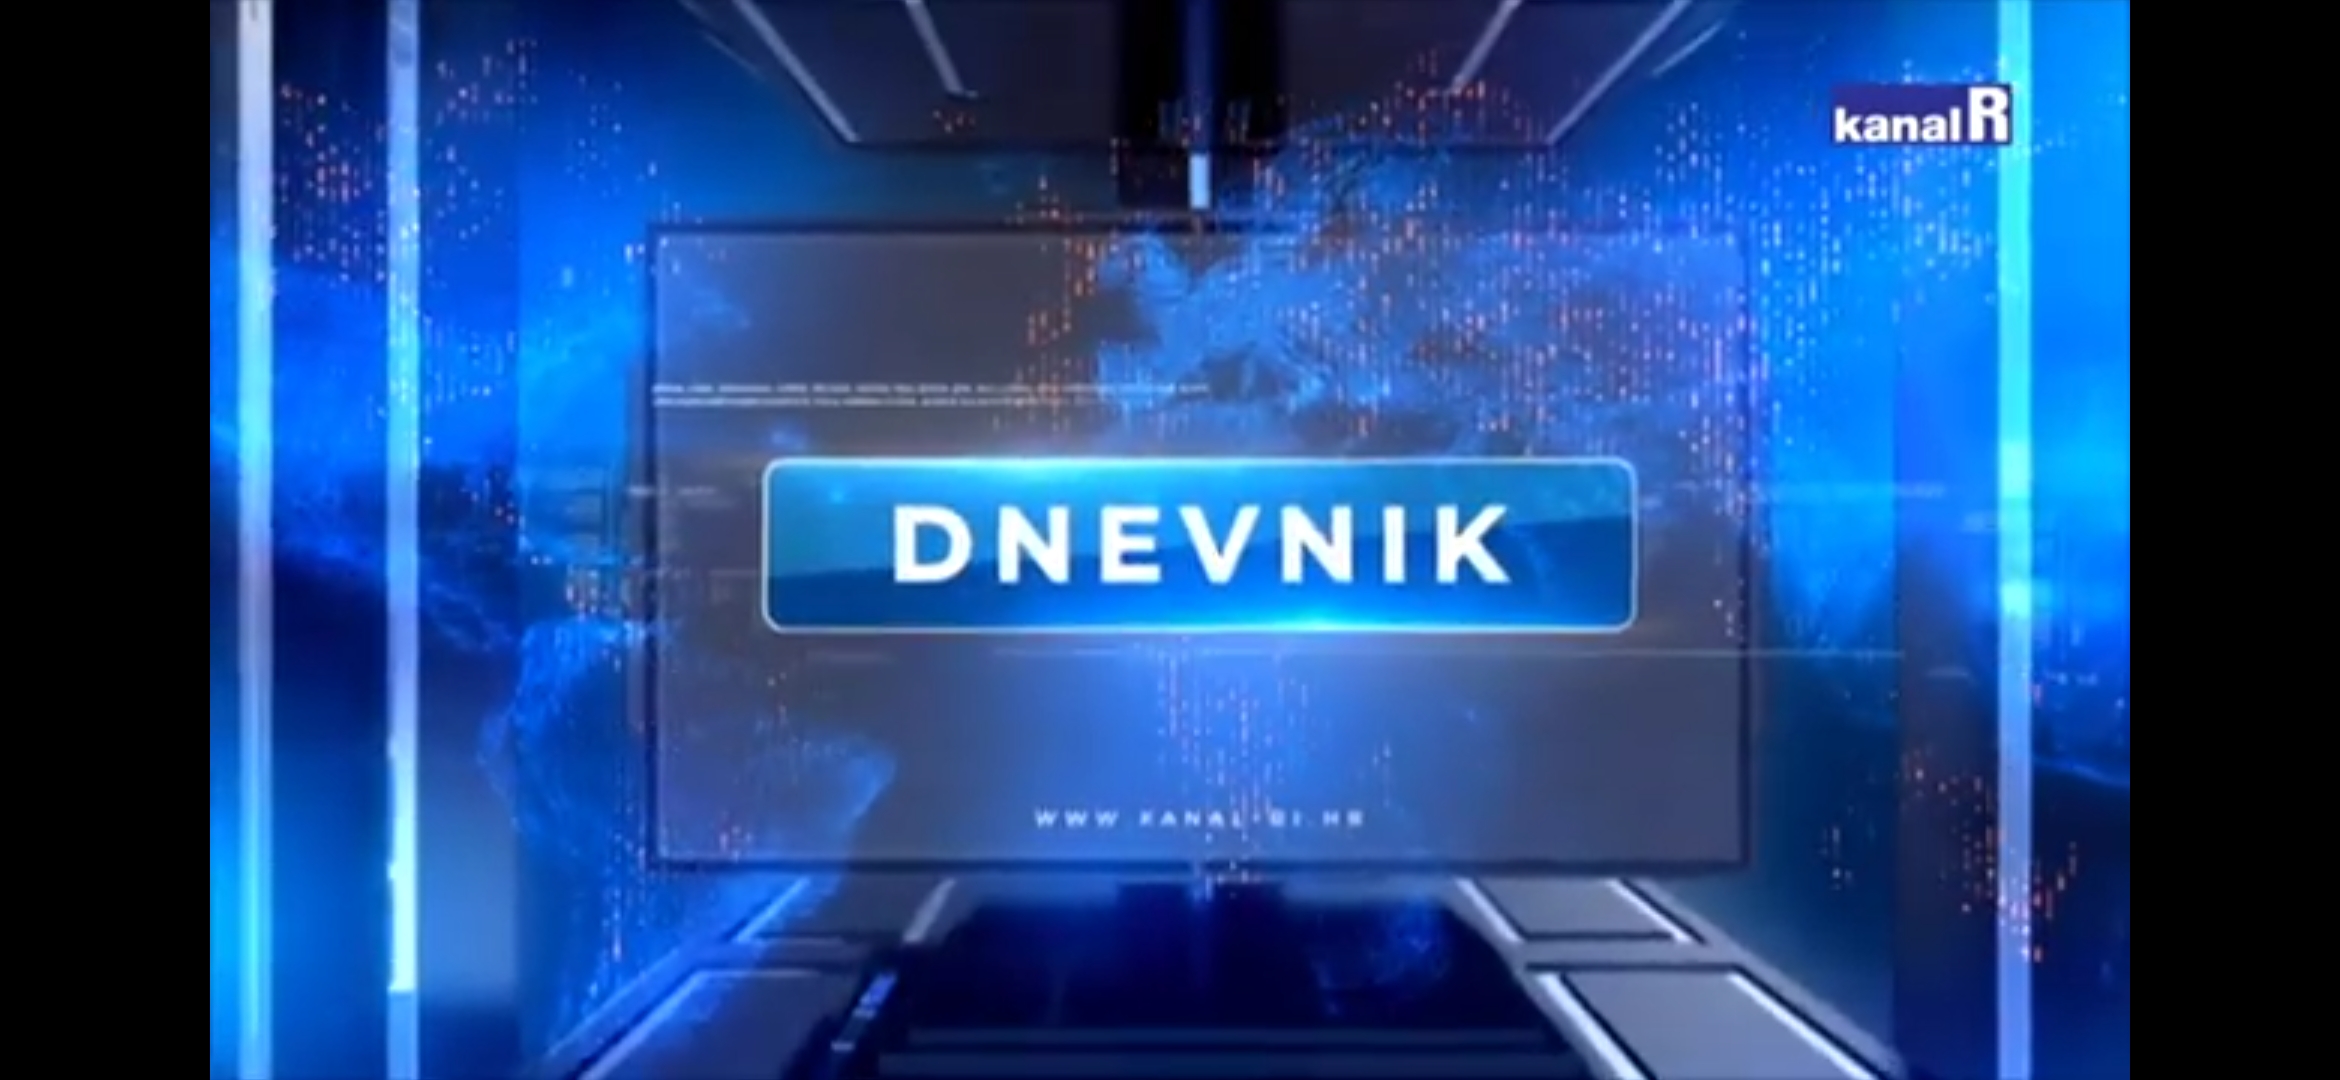 Dnevnik, Kanal Ri, 28.9.2021